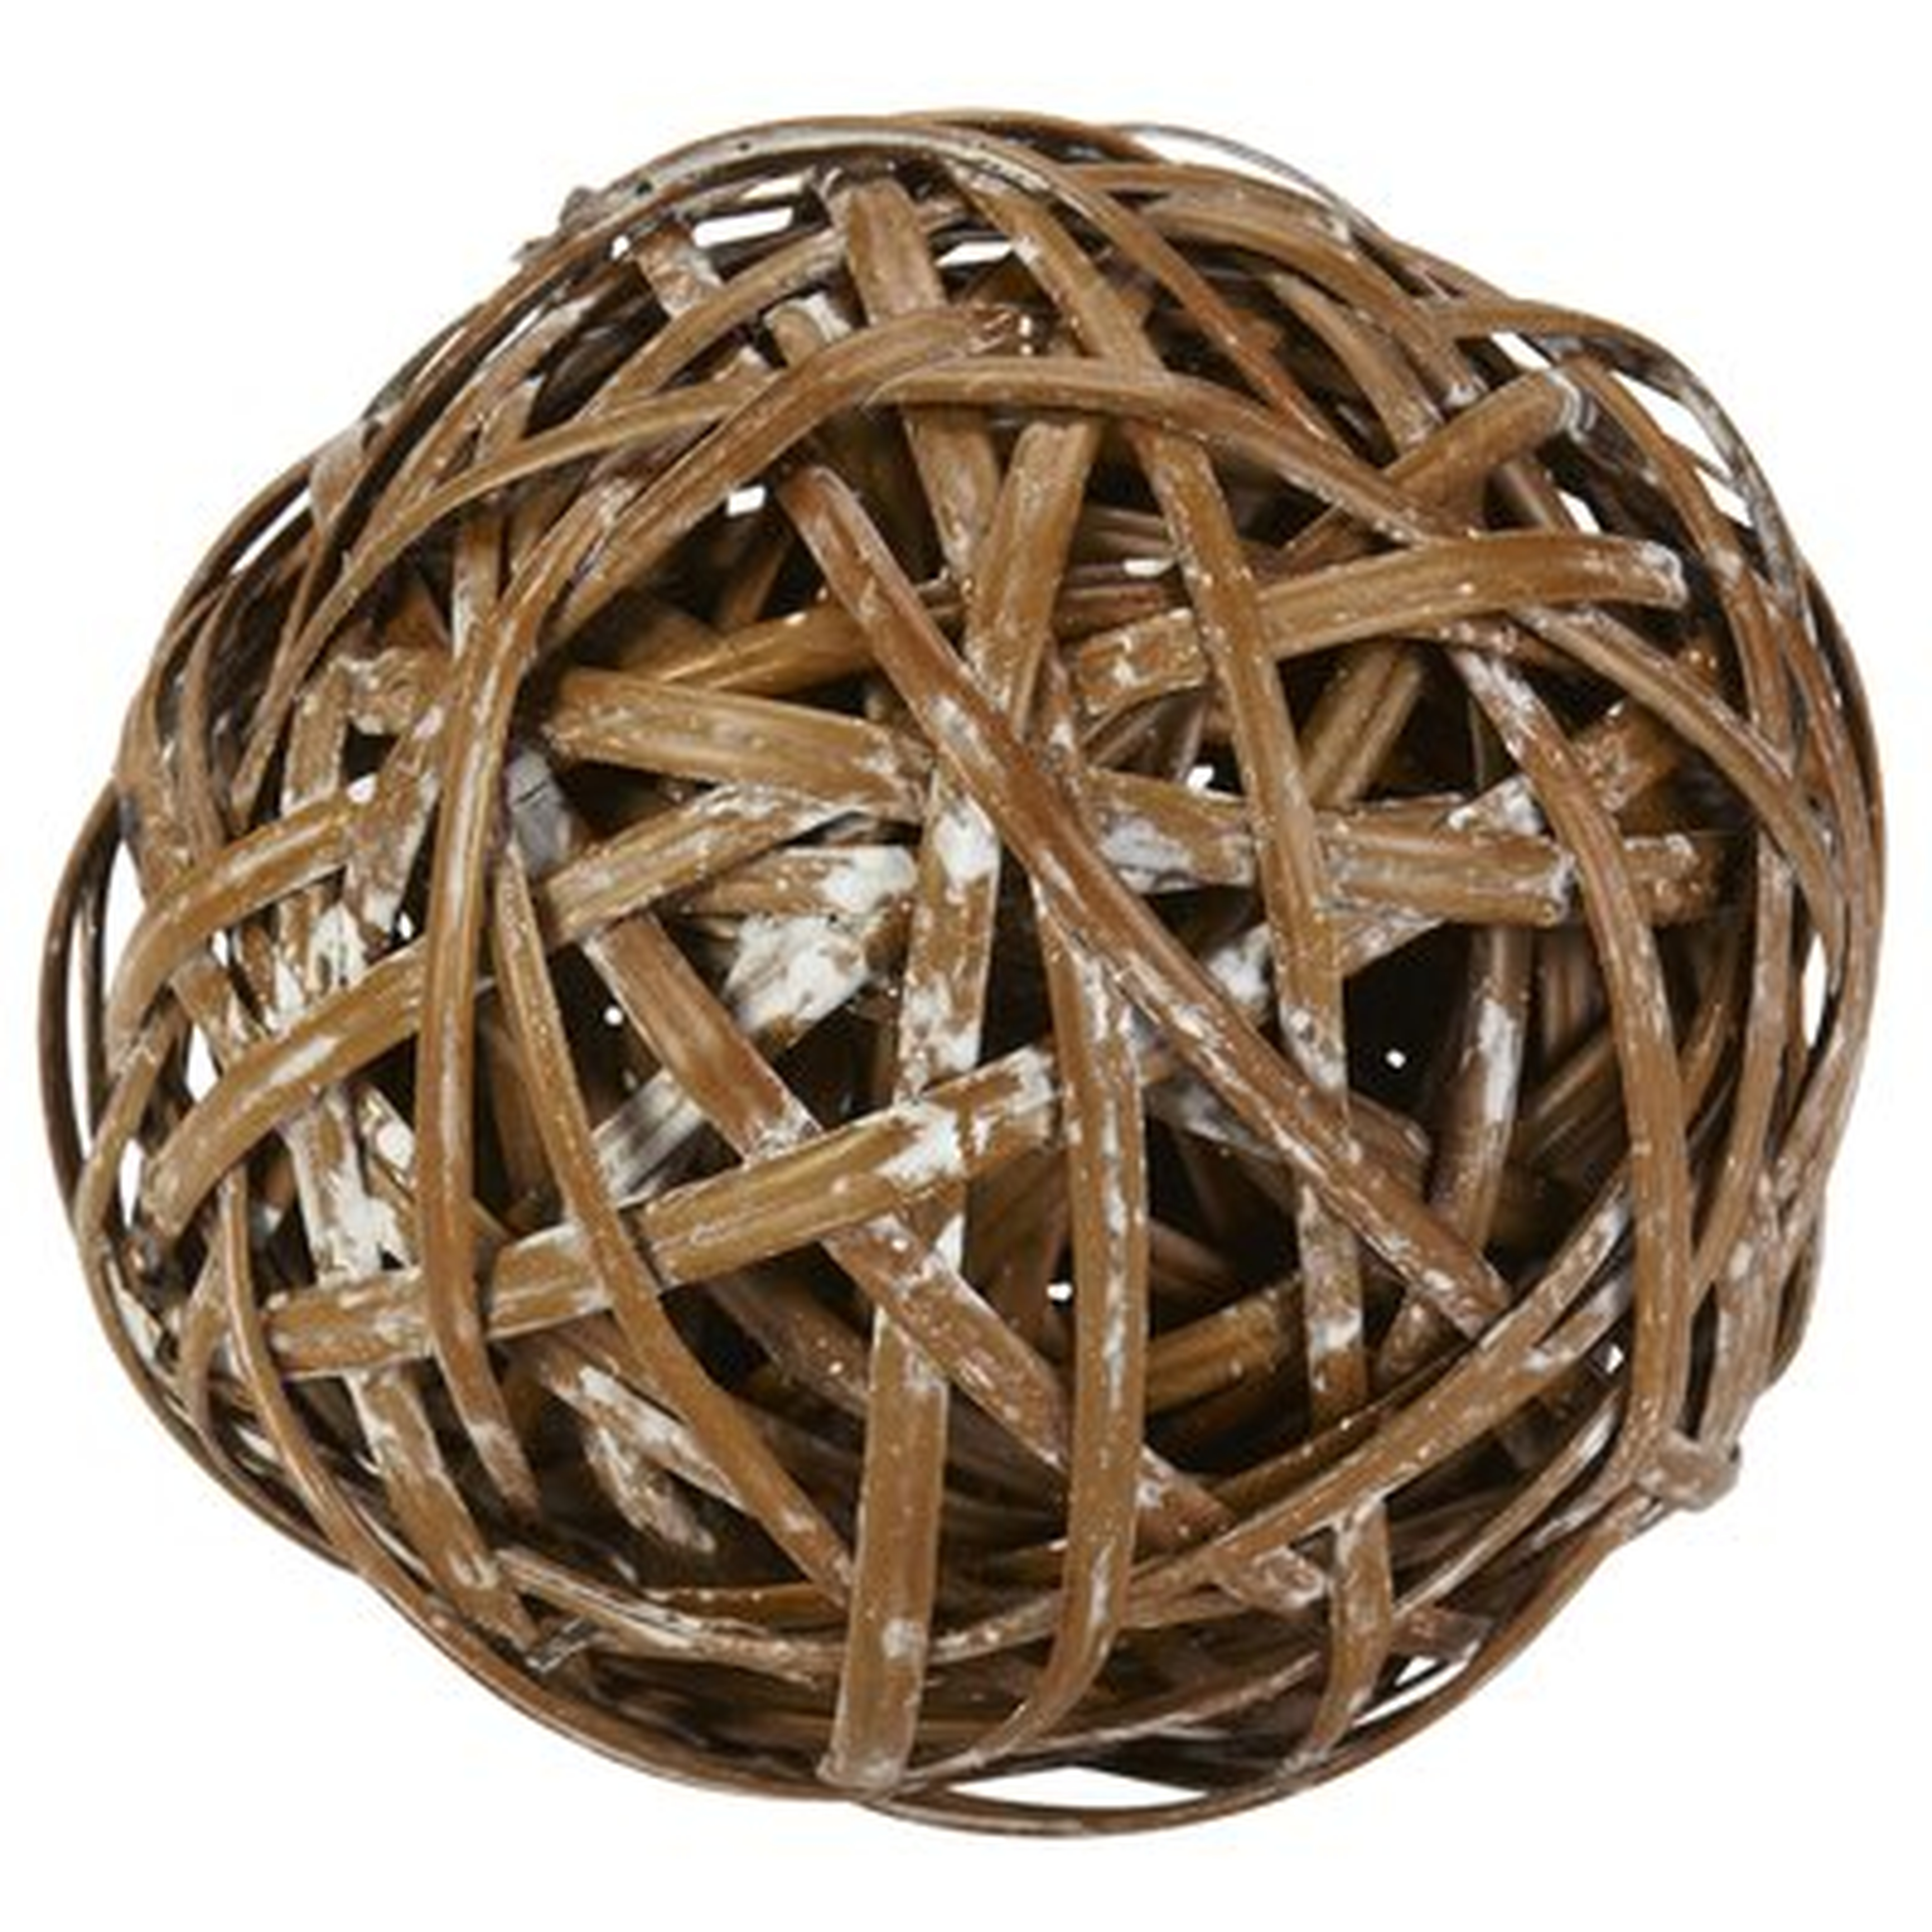 Decorative Balls Sculpture - Wayfair